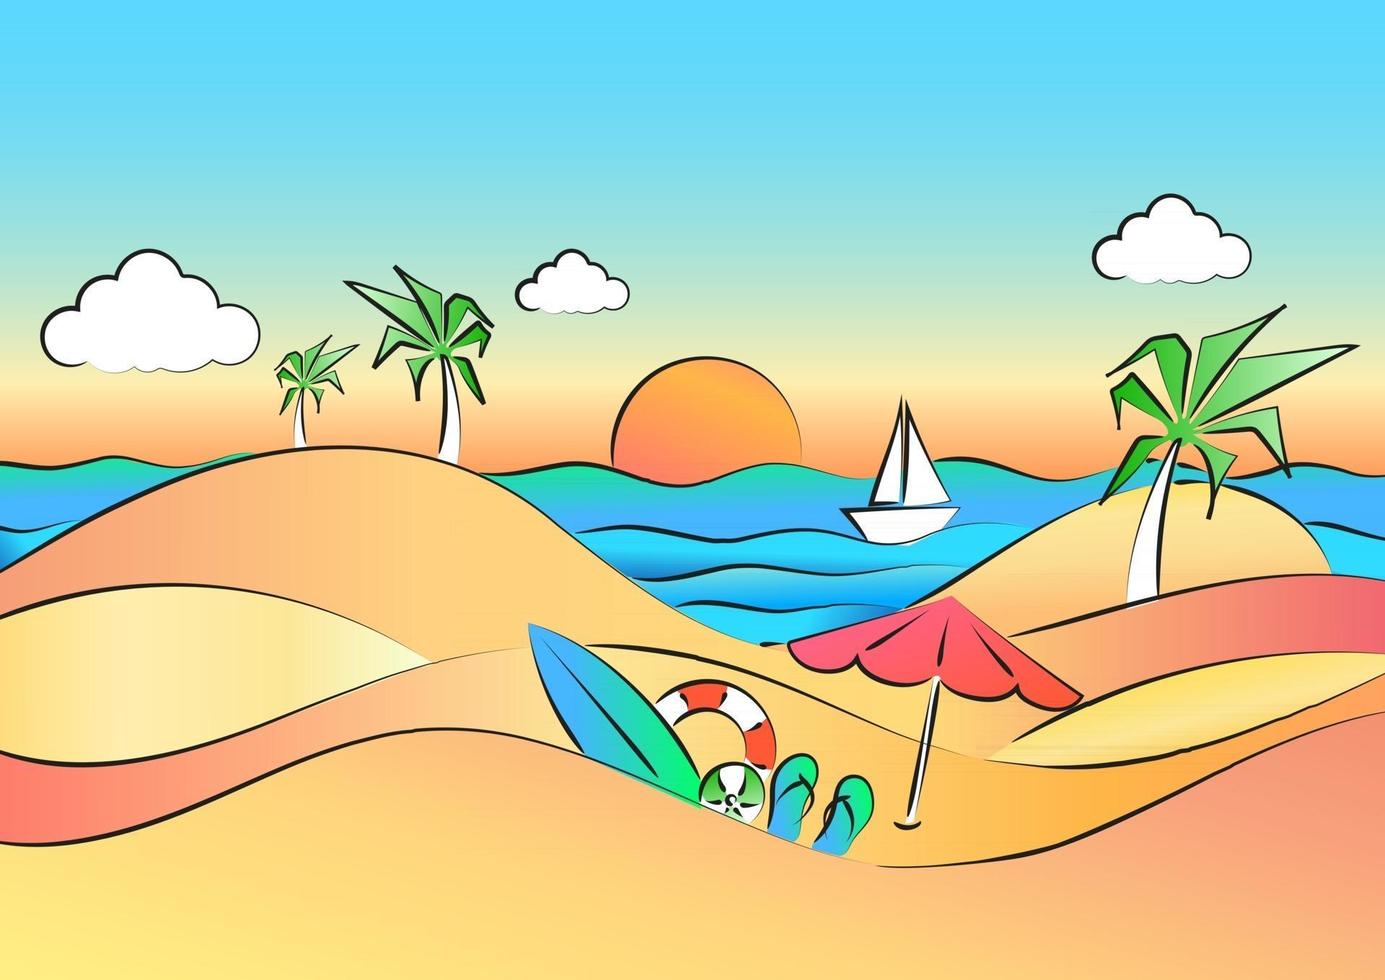 Retro-Comic-Stil Illustration mit Regenschirm, Surfbrett, Strandsandalen, Rettungsring und Palmen vektor